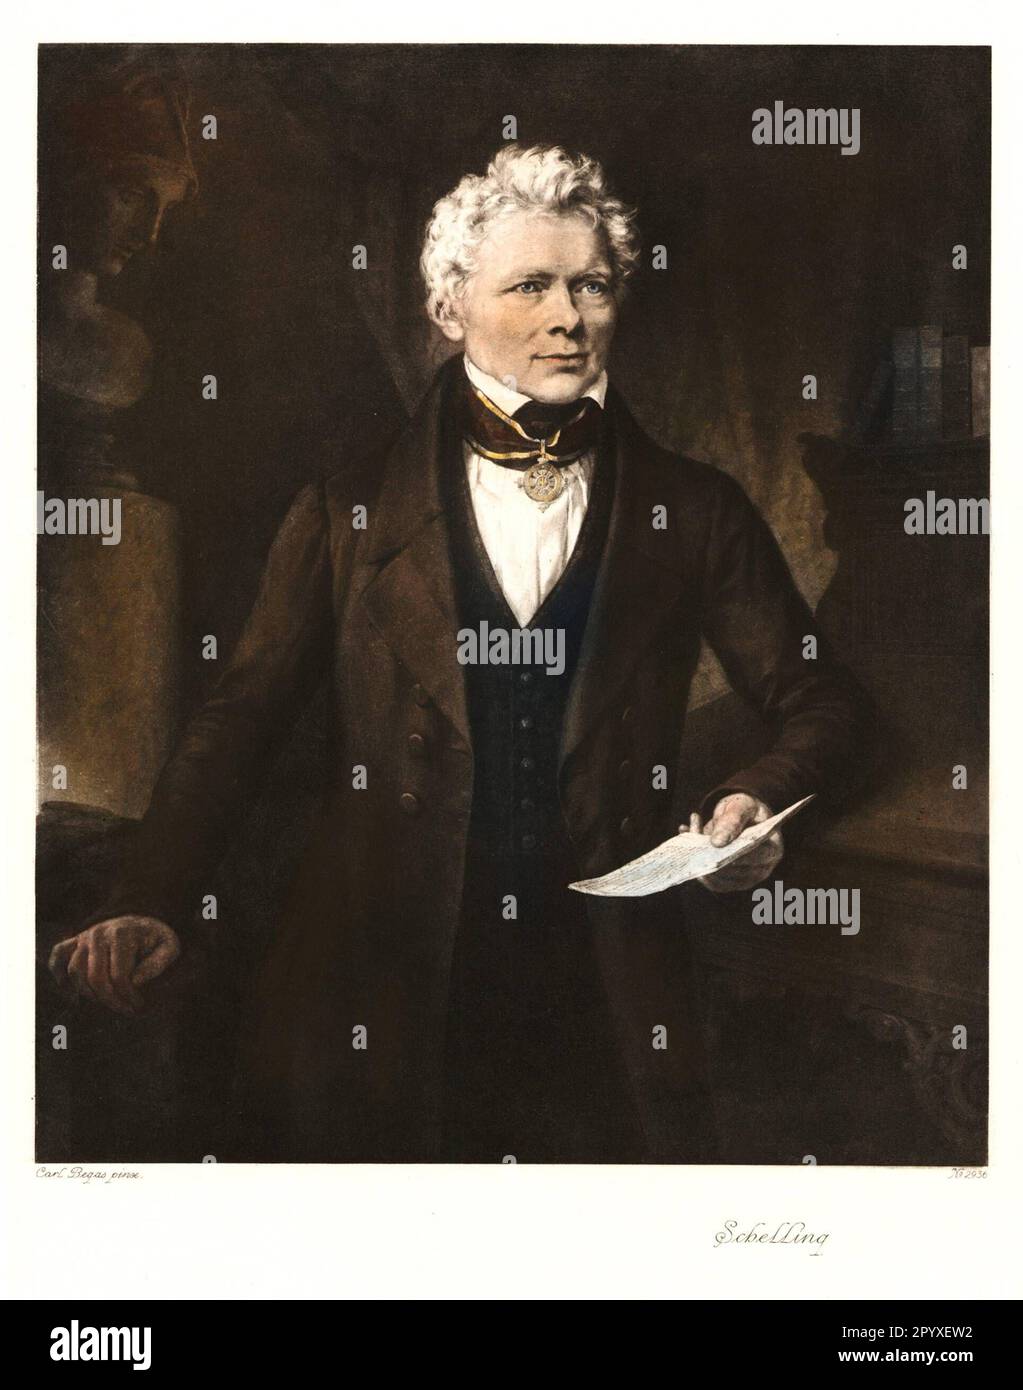 Friedrich Wilhelm Joseph von Schelling (1775-1854), German philosopher. Painting by Karl Begas. Photo: Heliogravure, Corpus Imaginum, Hanfstaengl Collection. [automated translation] Stock Photo